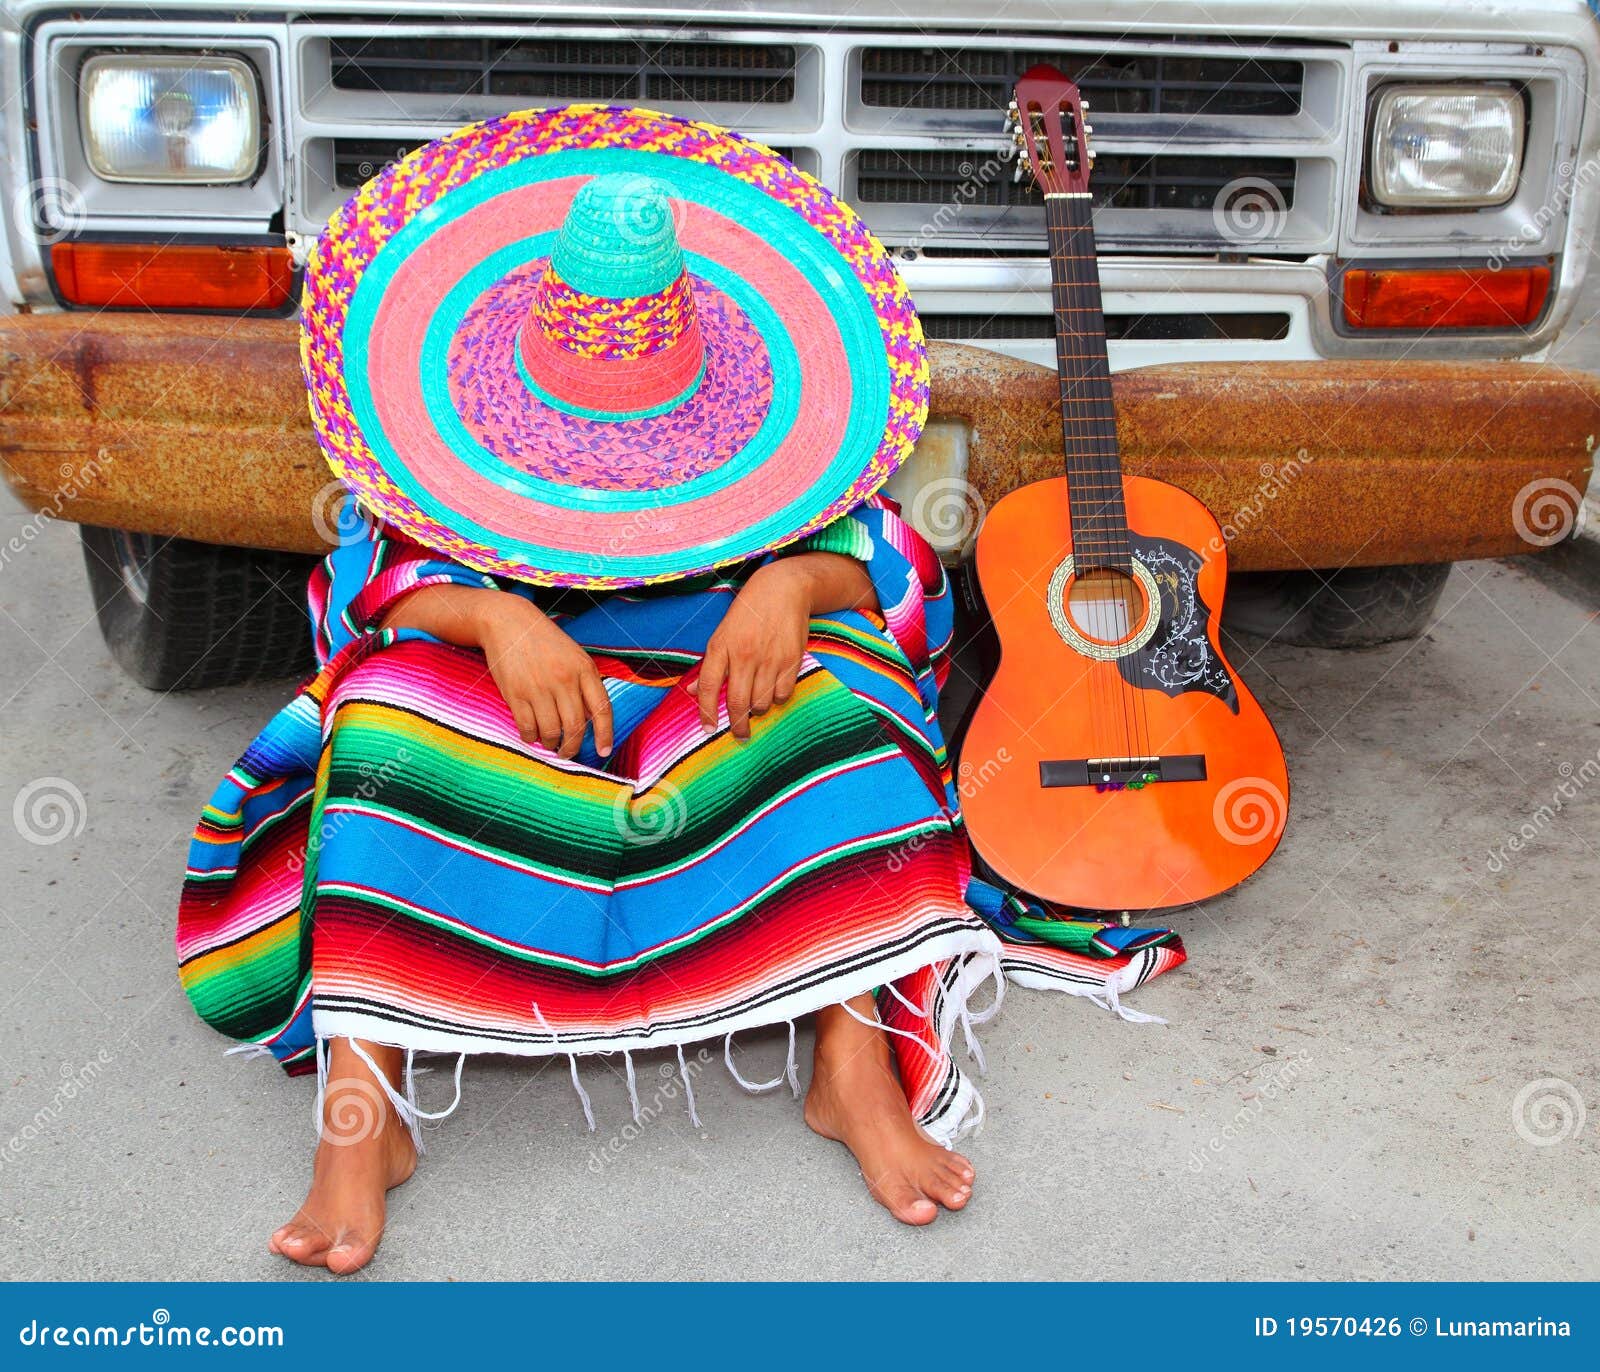 lazy-nap-mexican-guy-sleeping-grunge-car